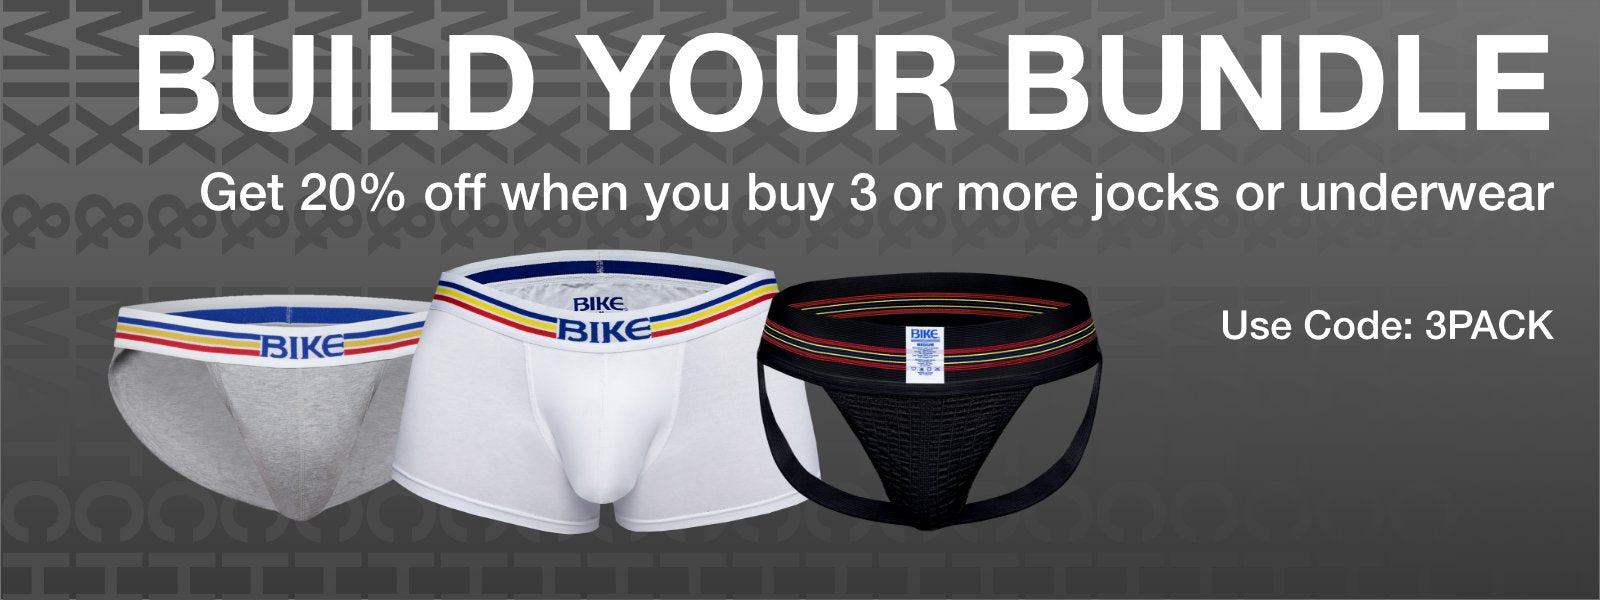 Bike Athletic Men's Brief Underwear 2-Pack White/Grey BAS307WHG at  International Jock